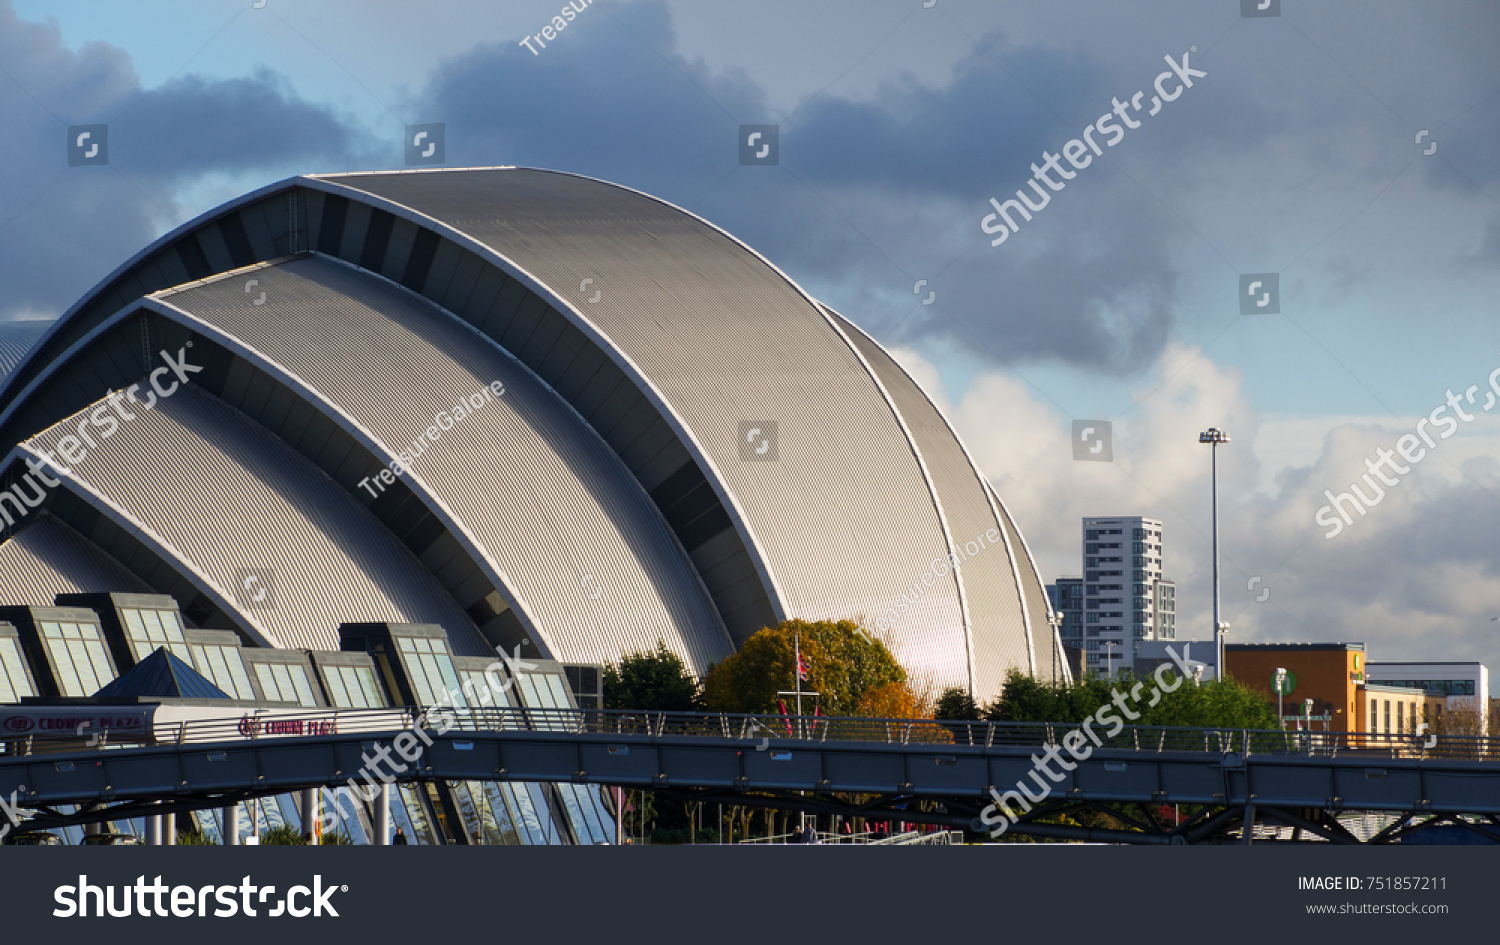 Scottish Exhibition Centre Armadillo, Glasgow, Scotland, UK; November 4th 2017: The SEC Armadillo building on Clydeside in Glasgow. #751857211